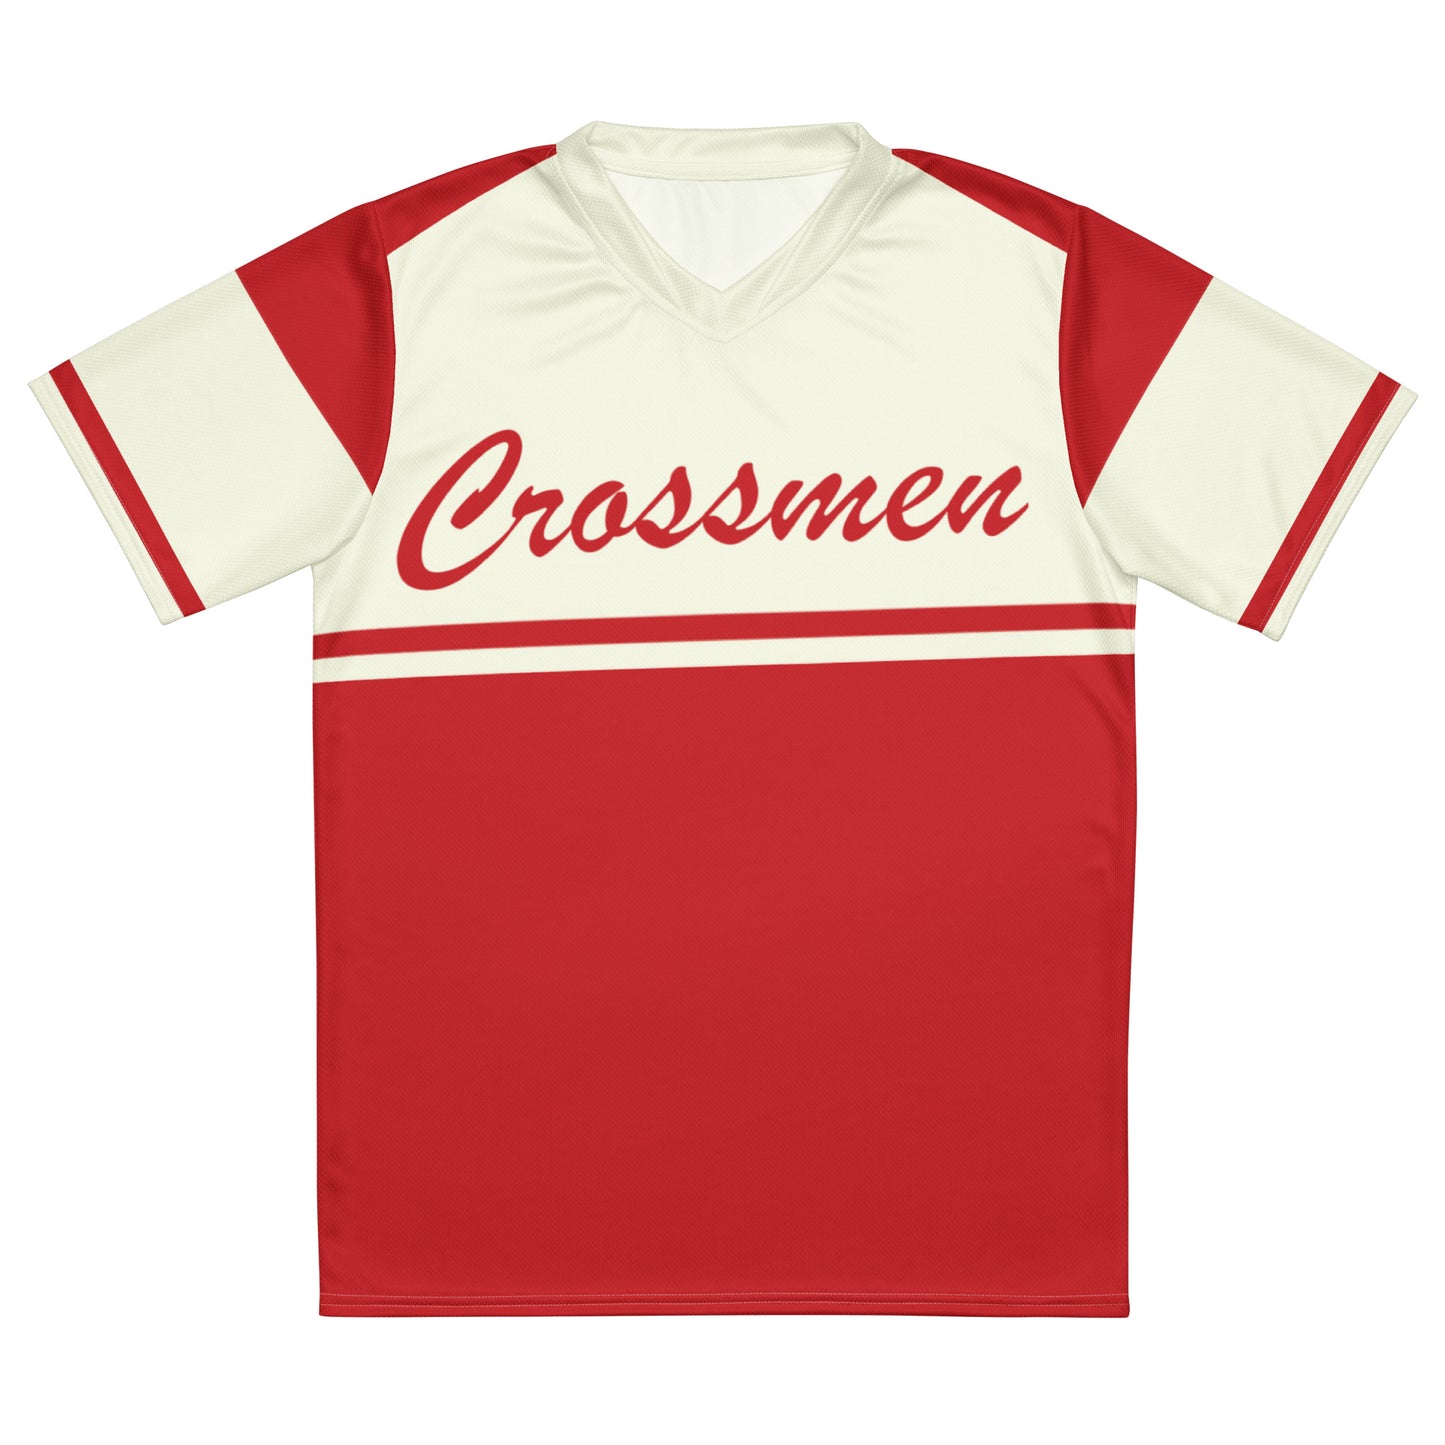 Crossmen Recycled unisex sports jersey